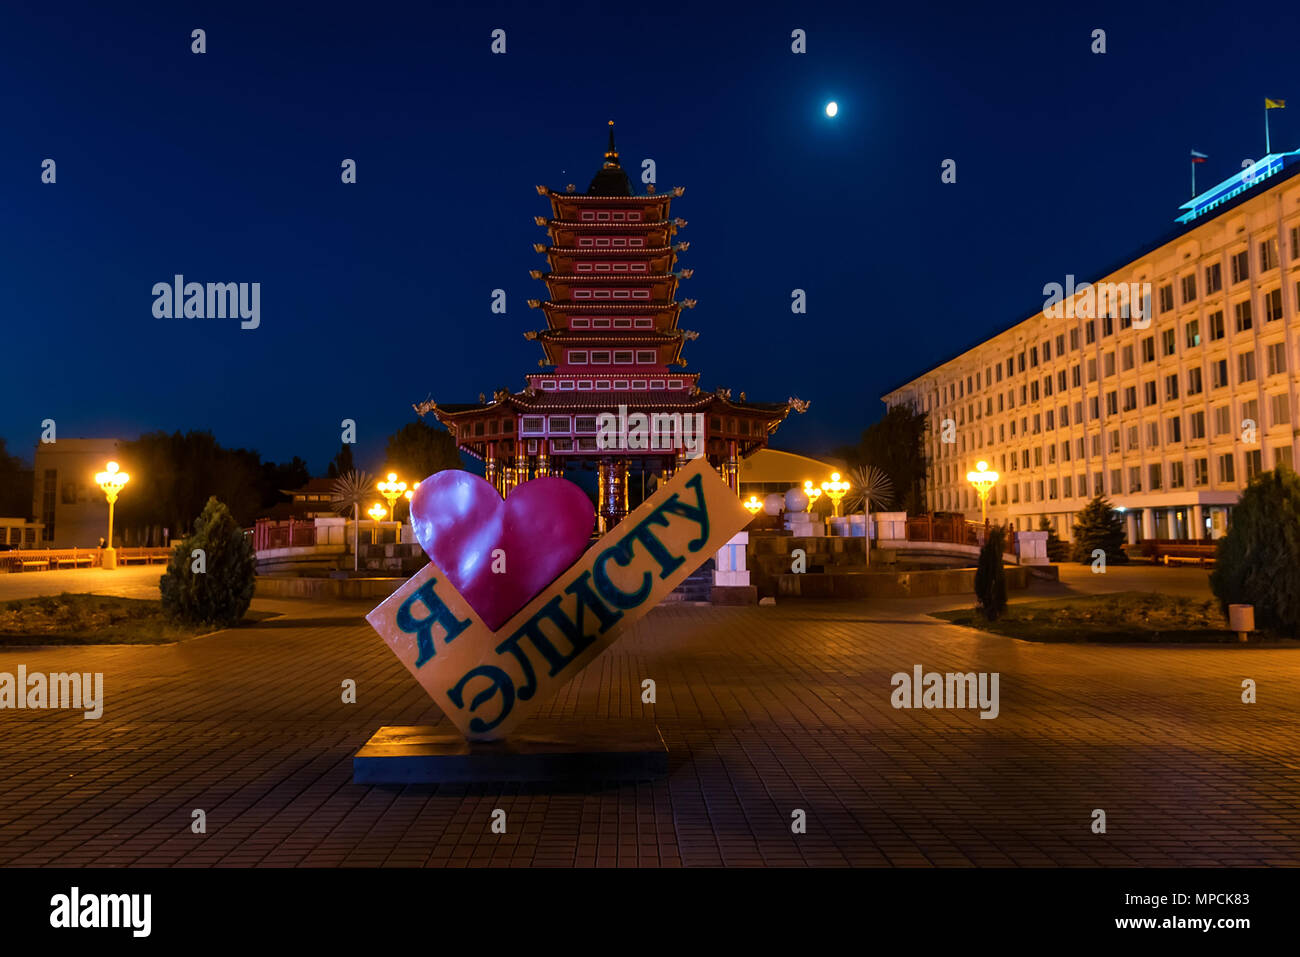 ELISTA, RUSSIA - MAY 6, 2018: I love Elista sign at night in capital of Kalmykia Stock Photo